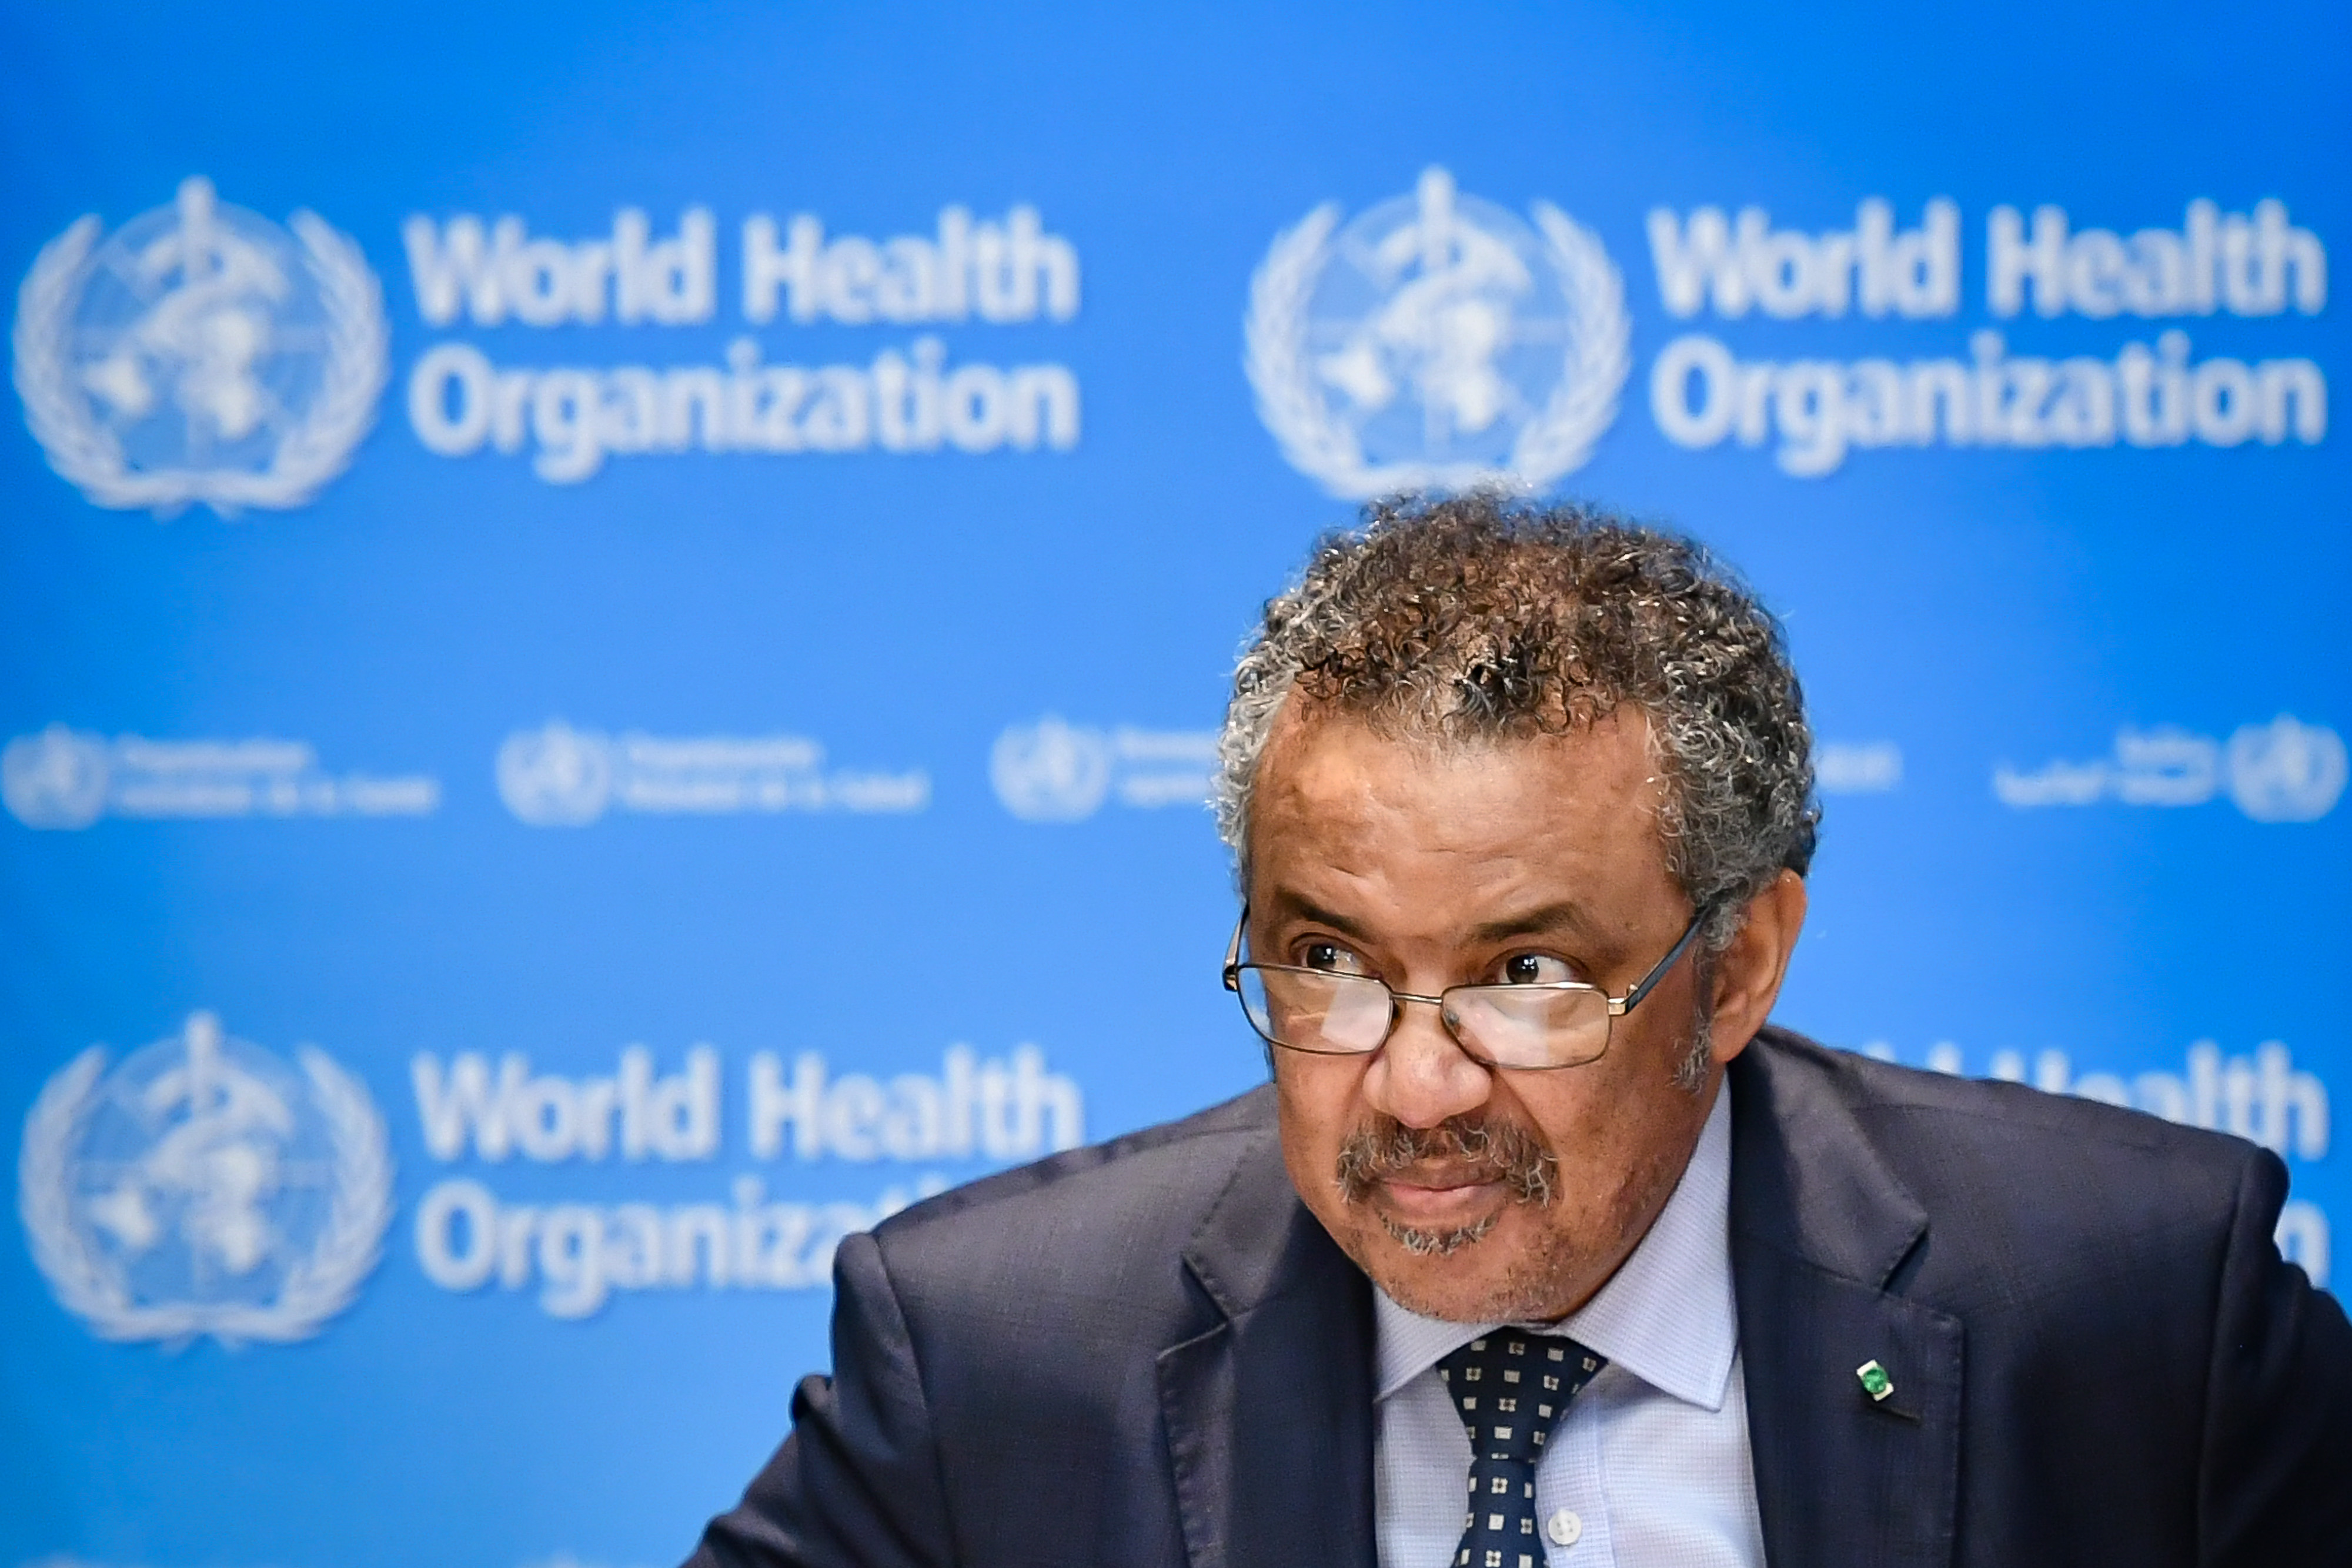 World Health Organization Director General, Tedros Adhanom Ghebreyesus